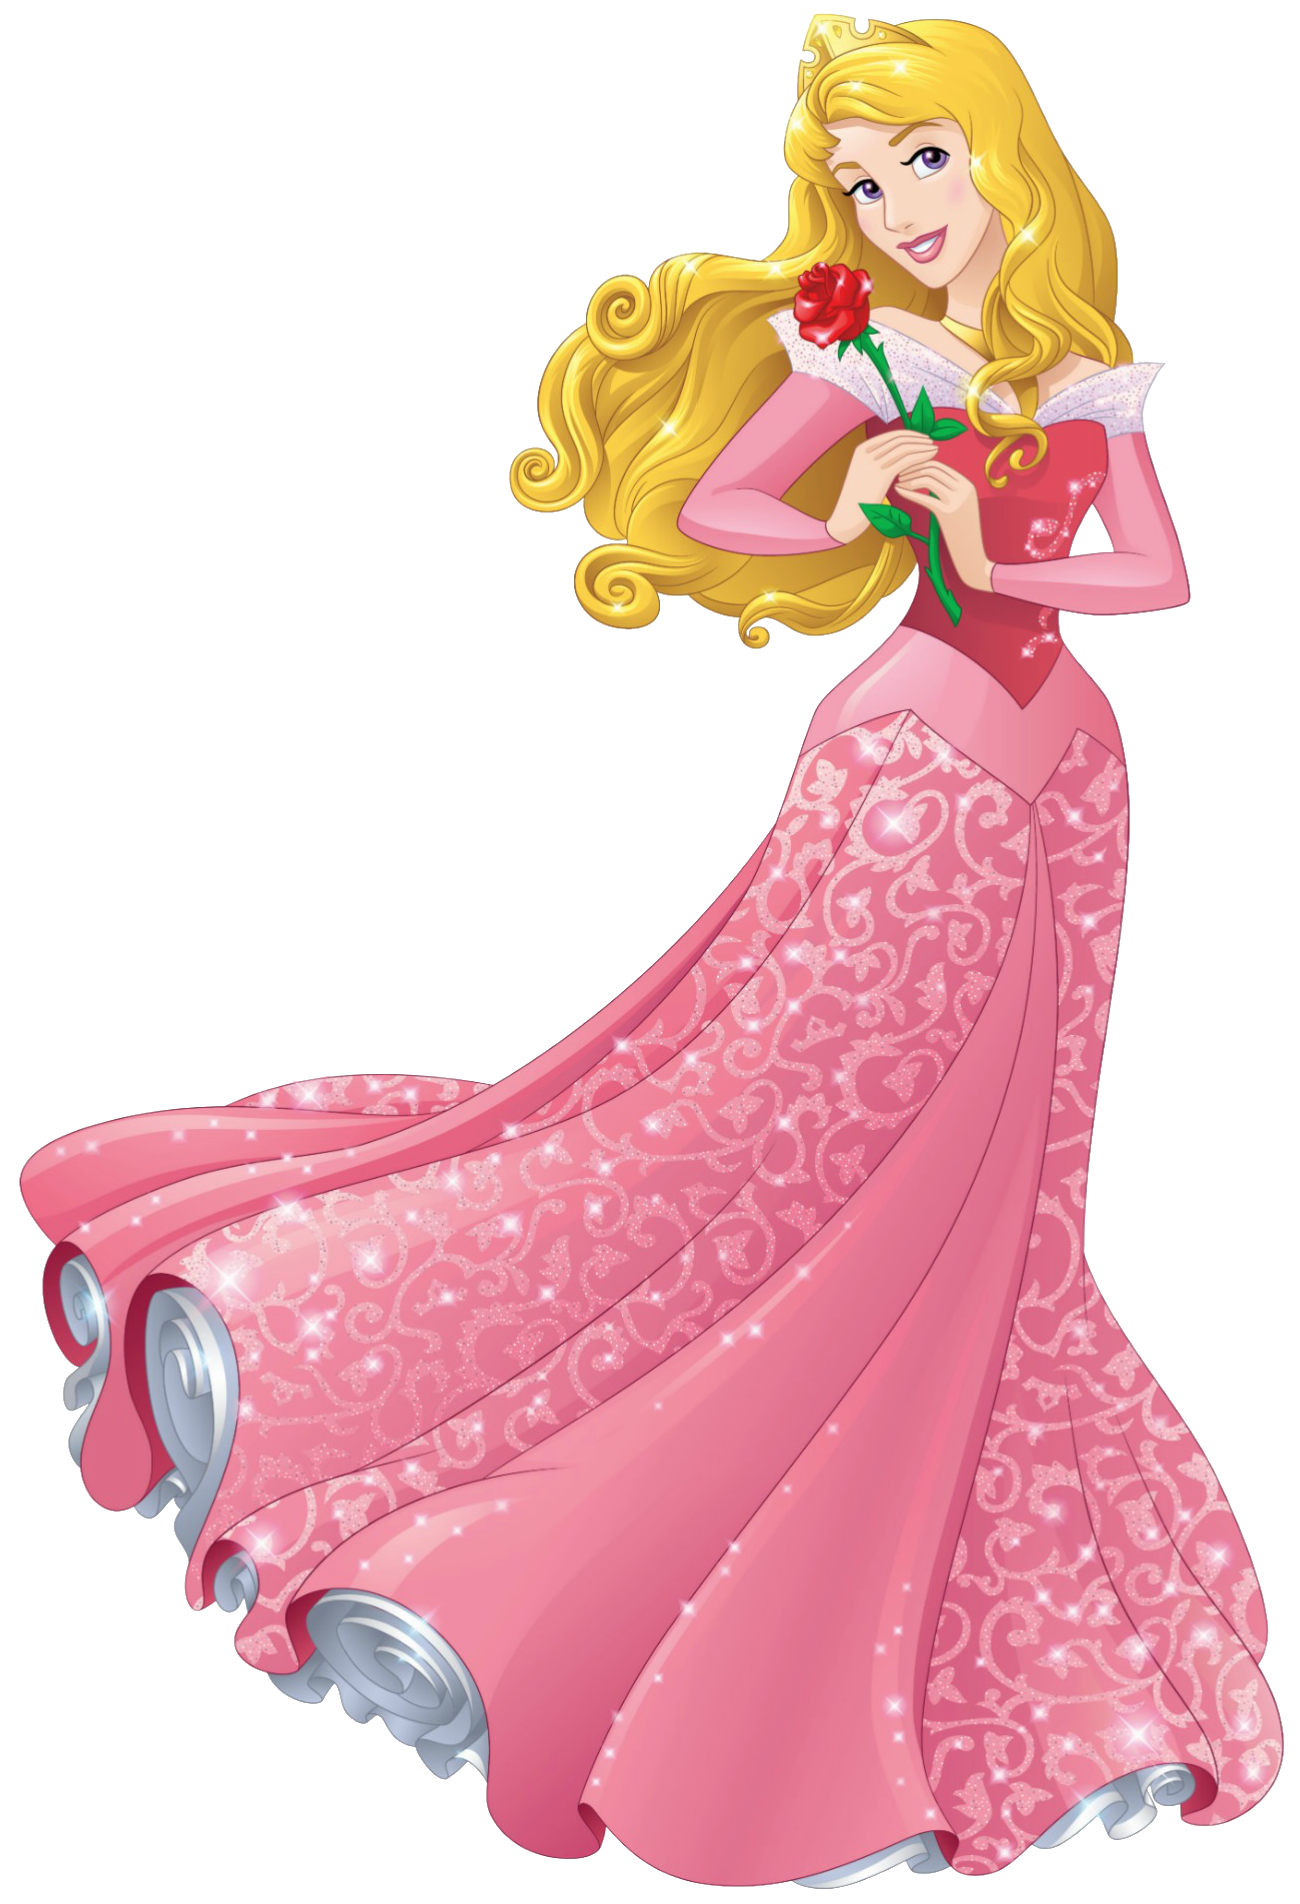 Disney Princess - Wikipedia